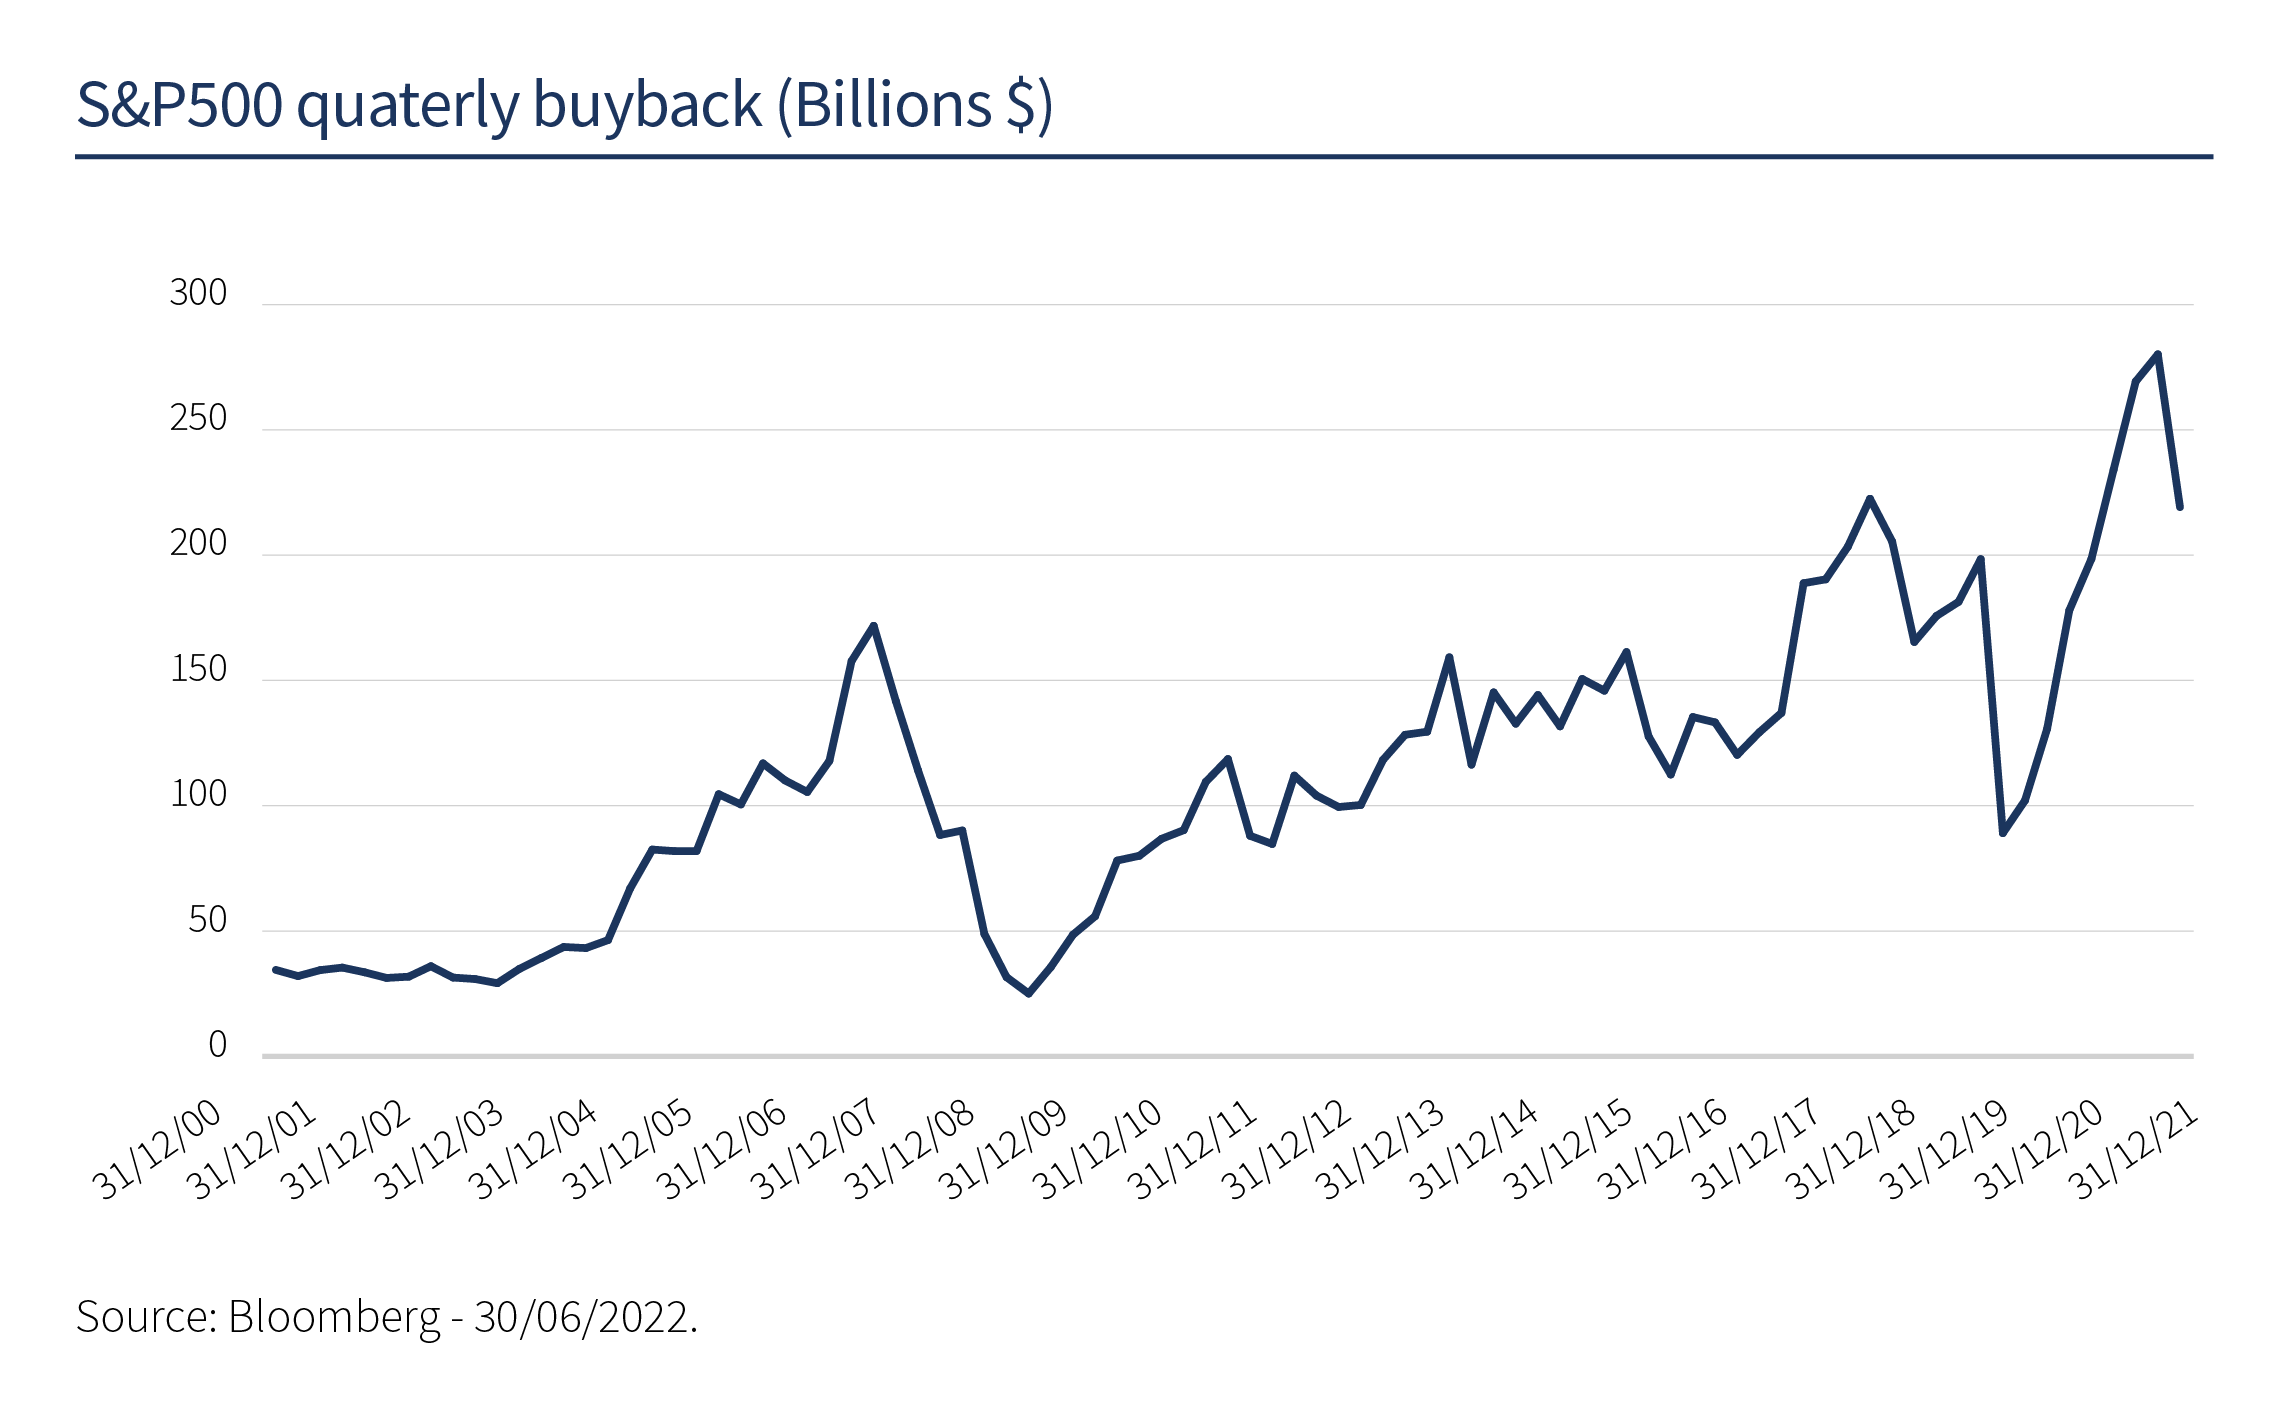 SP500 Quarterly buyback